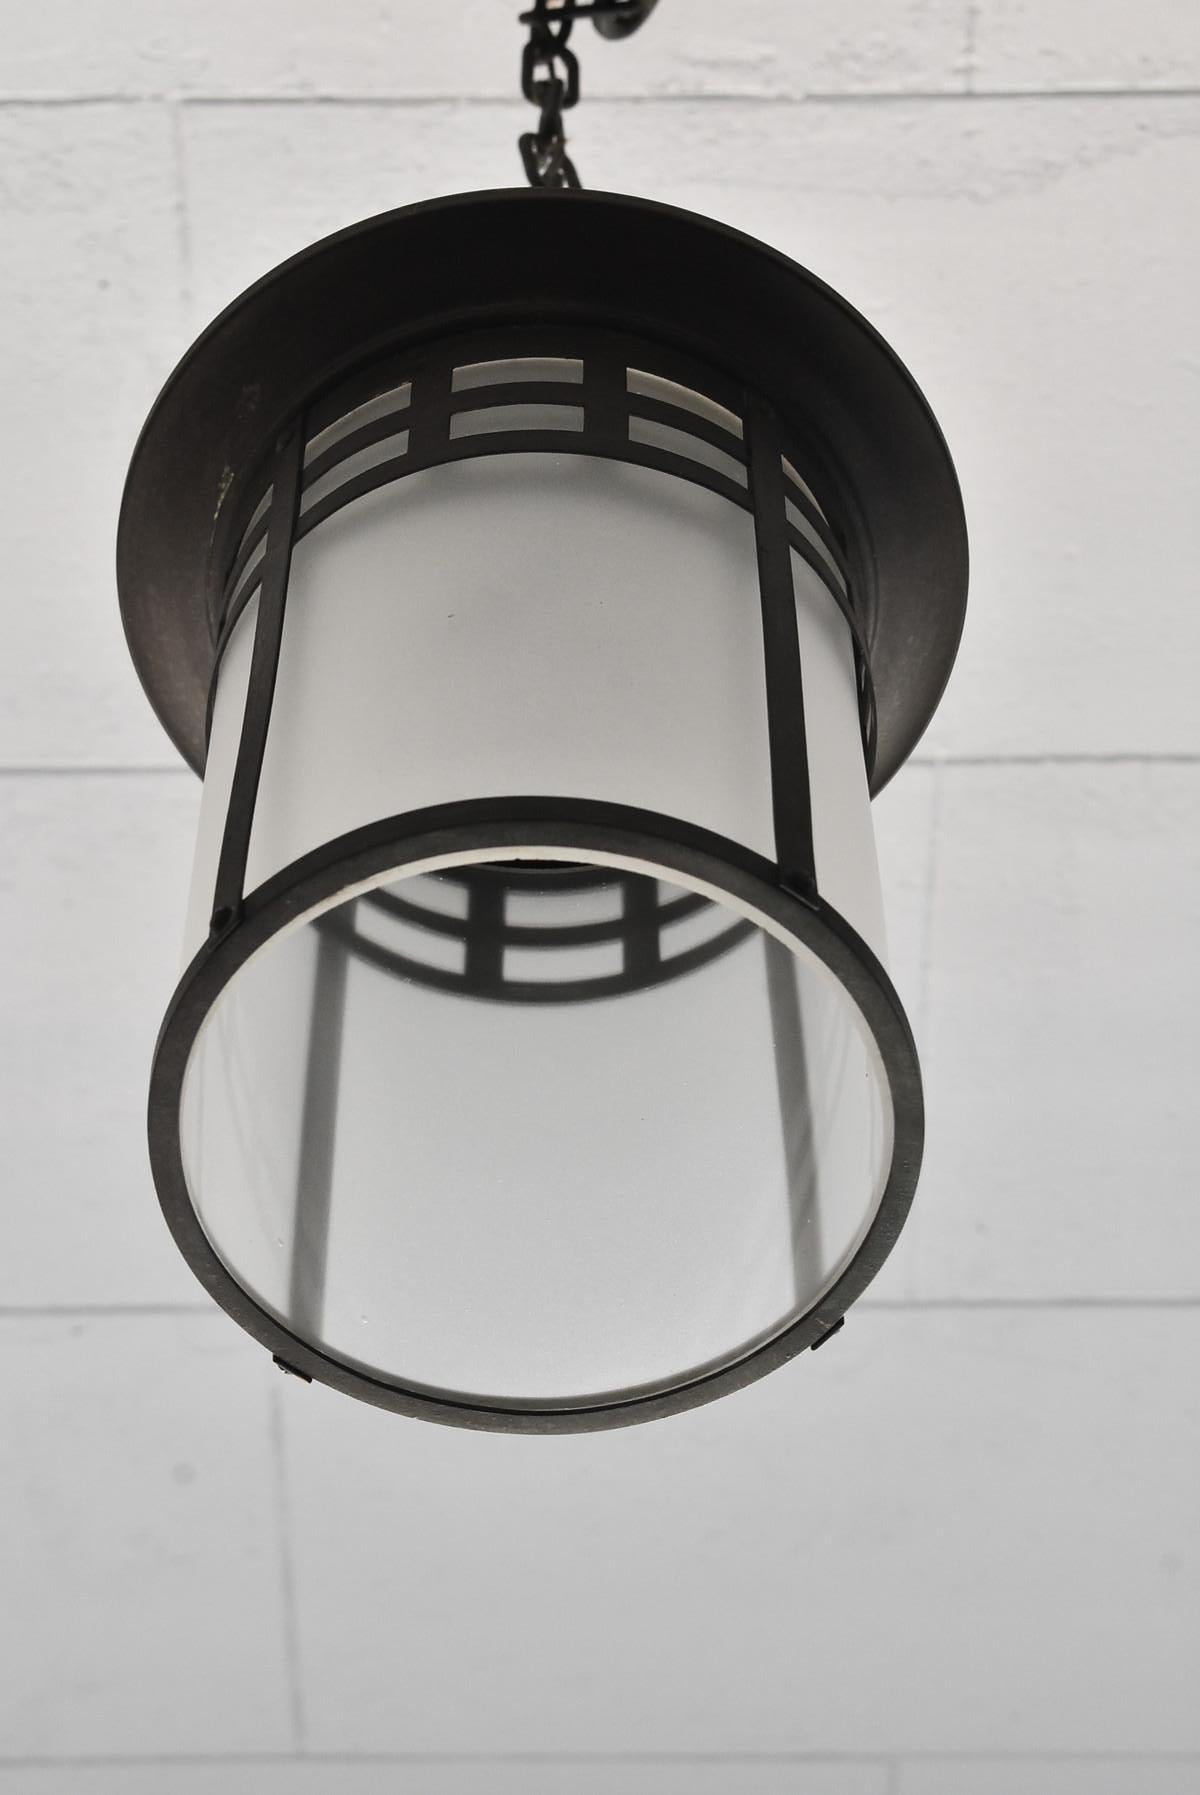 19th Century Japanese Antique Hanging Lantern Type Glass Pendant Light / Ceiling Lighting